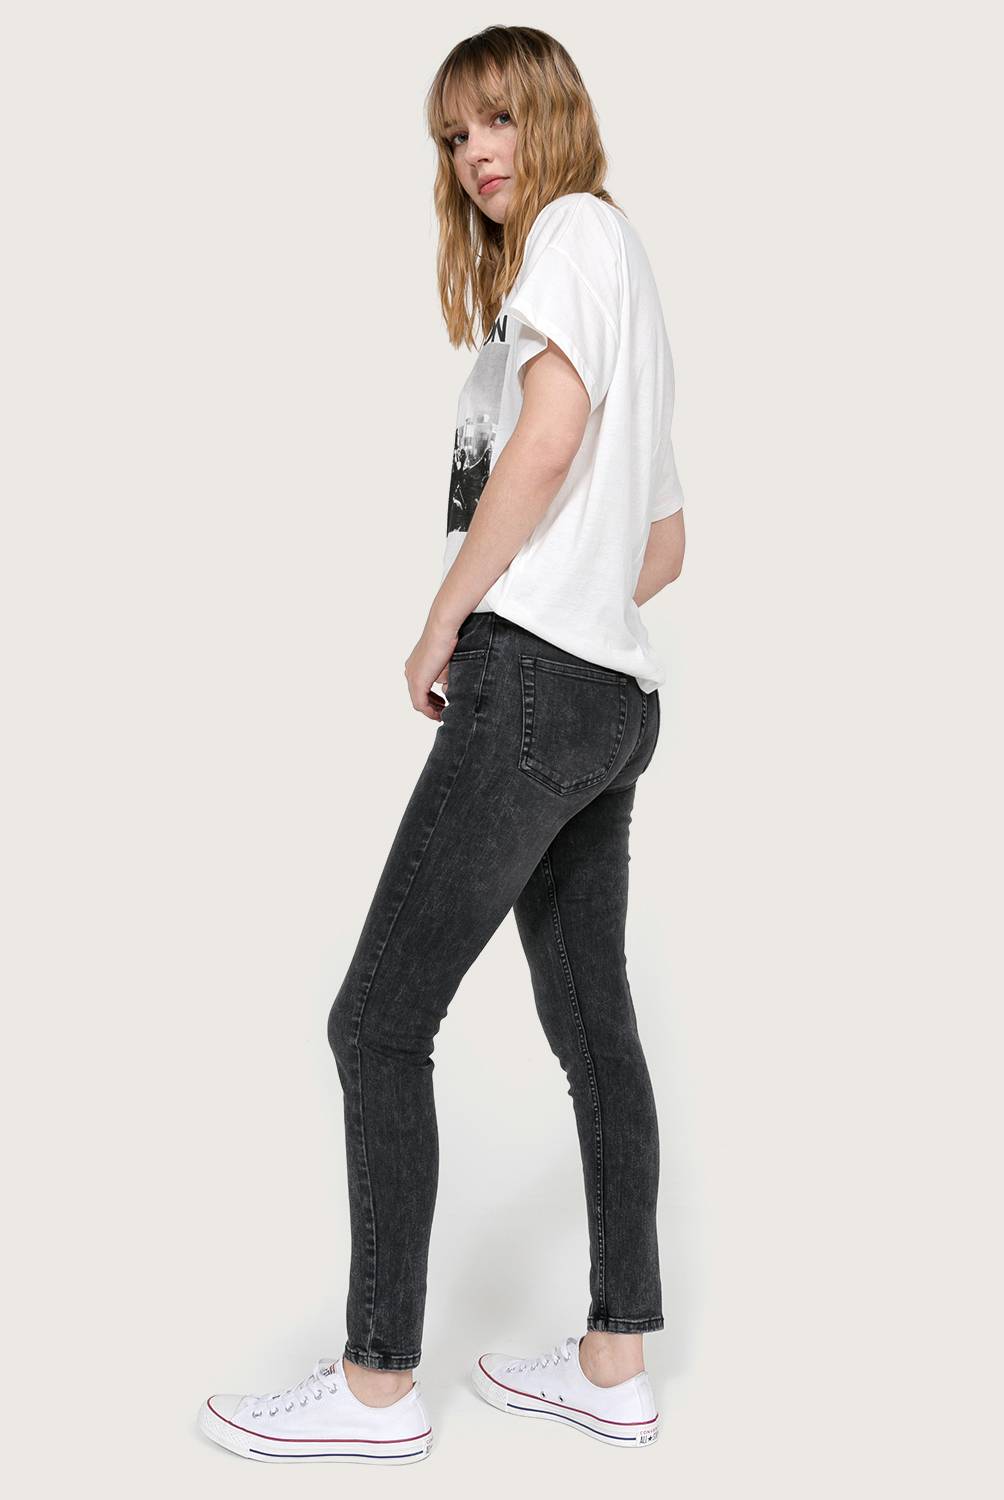 AMERICANINO - Jeans Skinny Tiro Alto Mujer